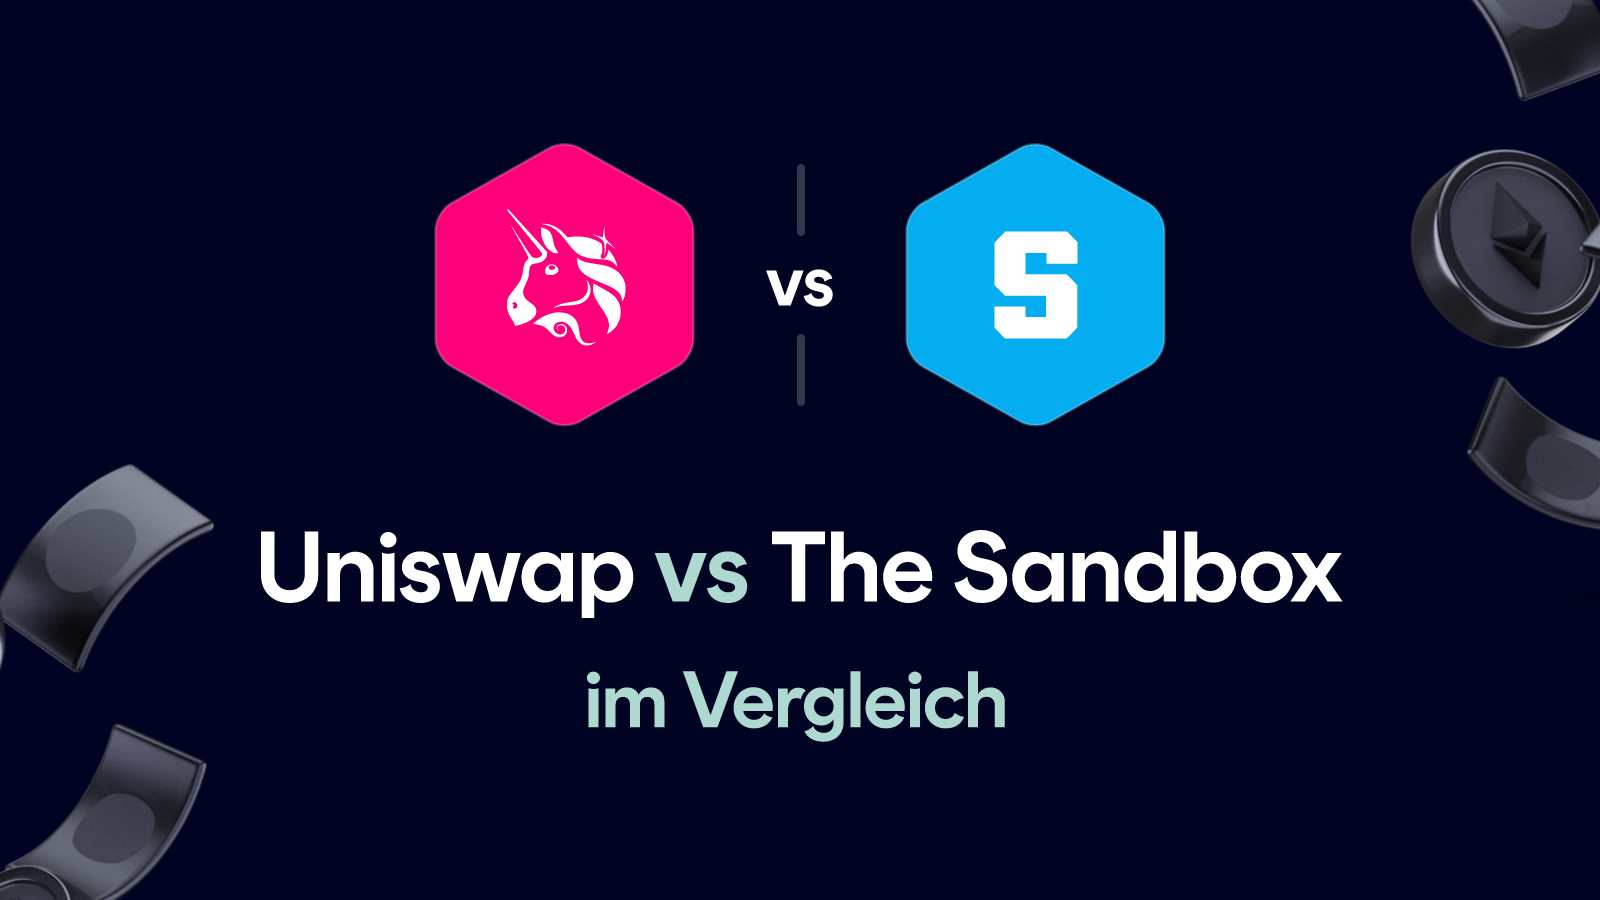 Uniswap vs The Sandbox